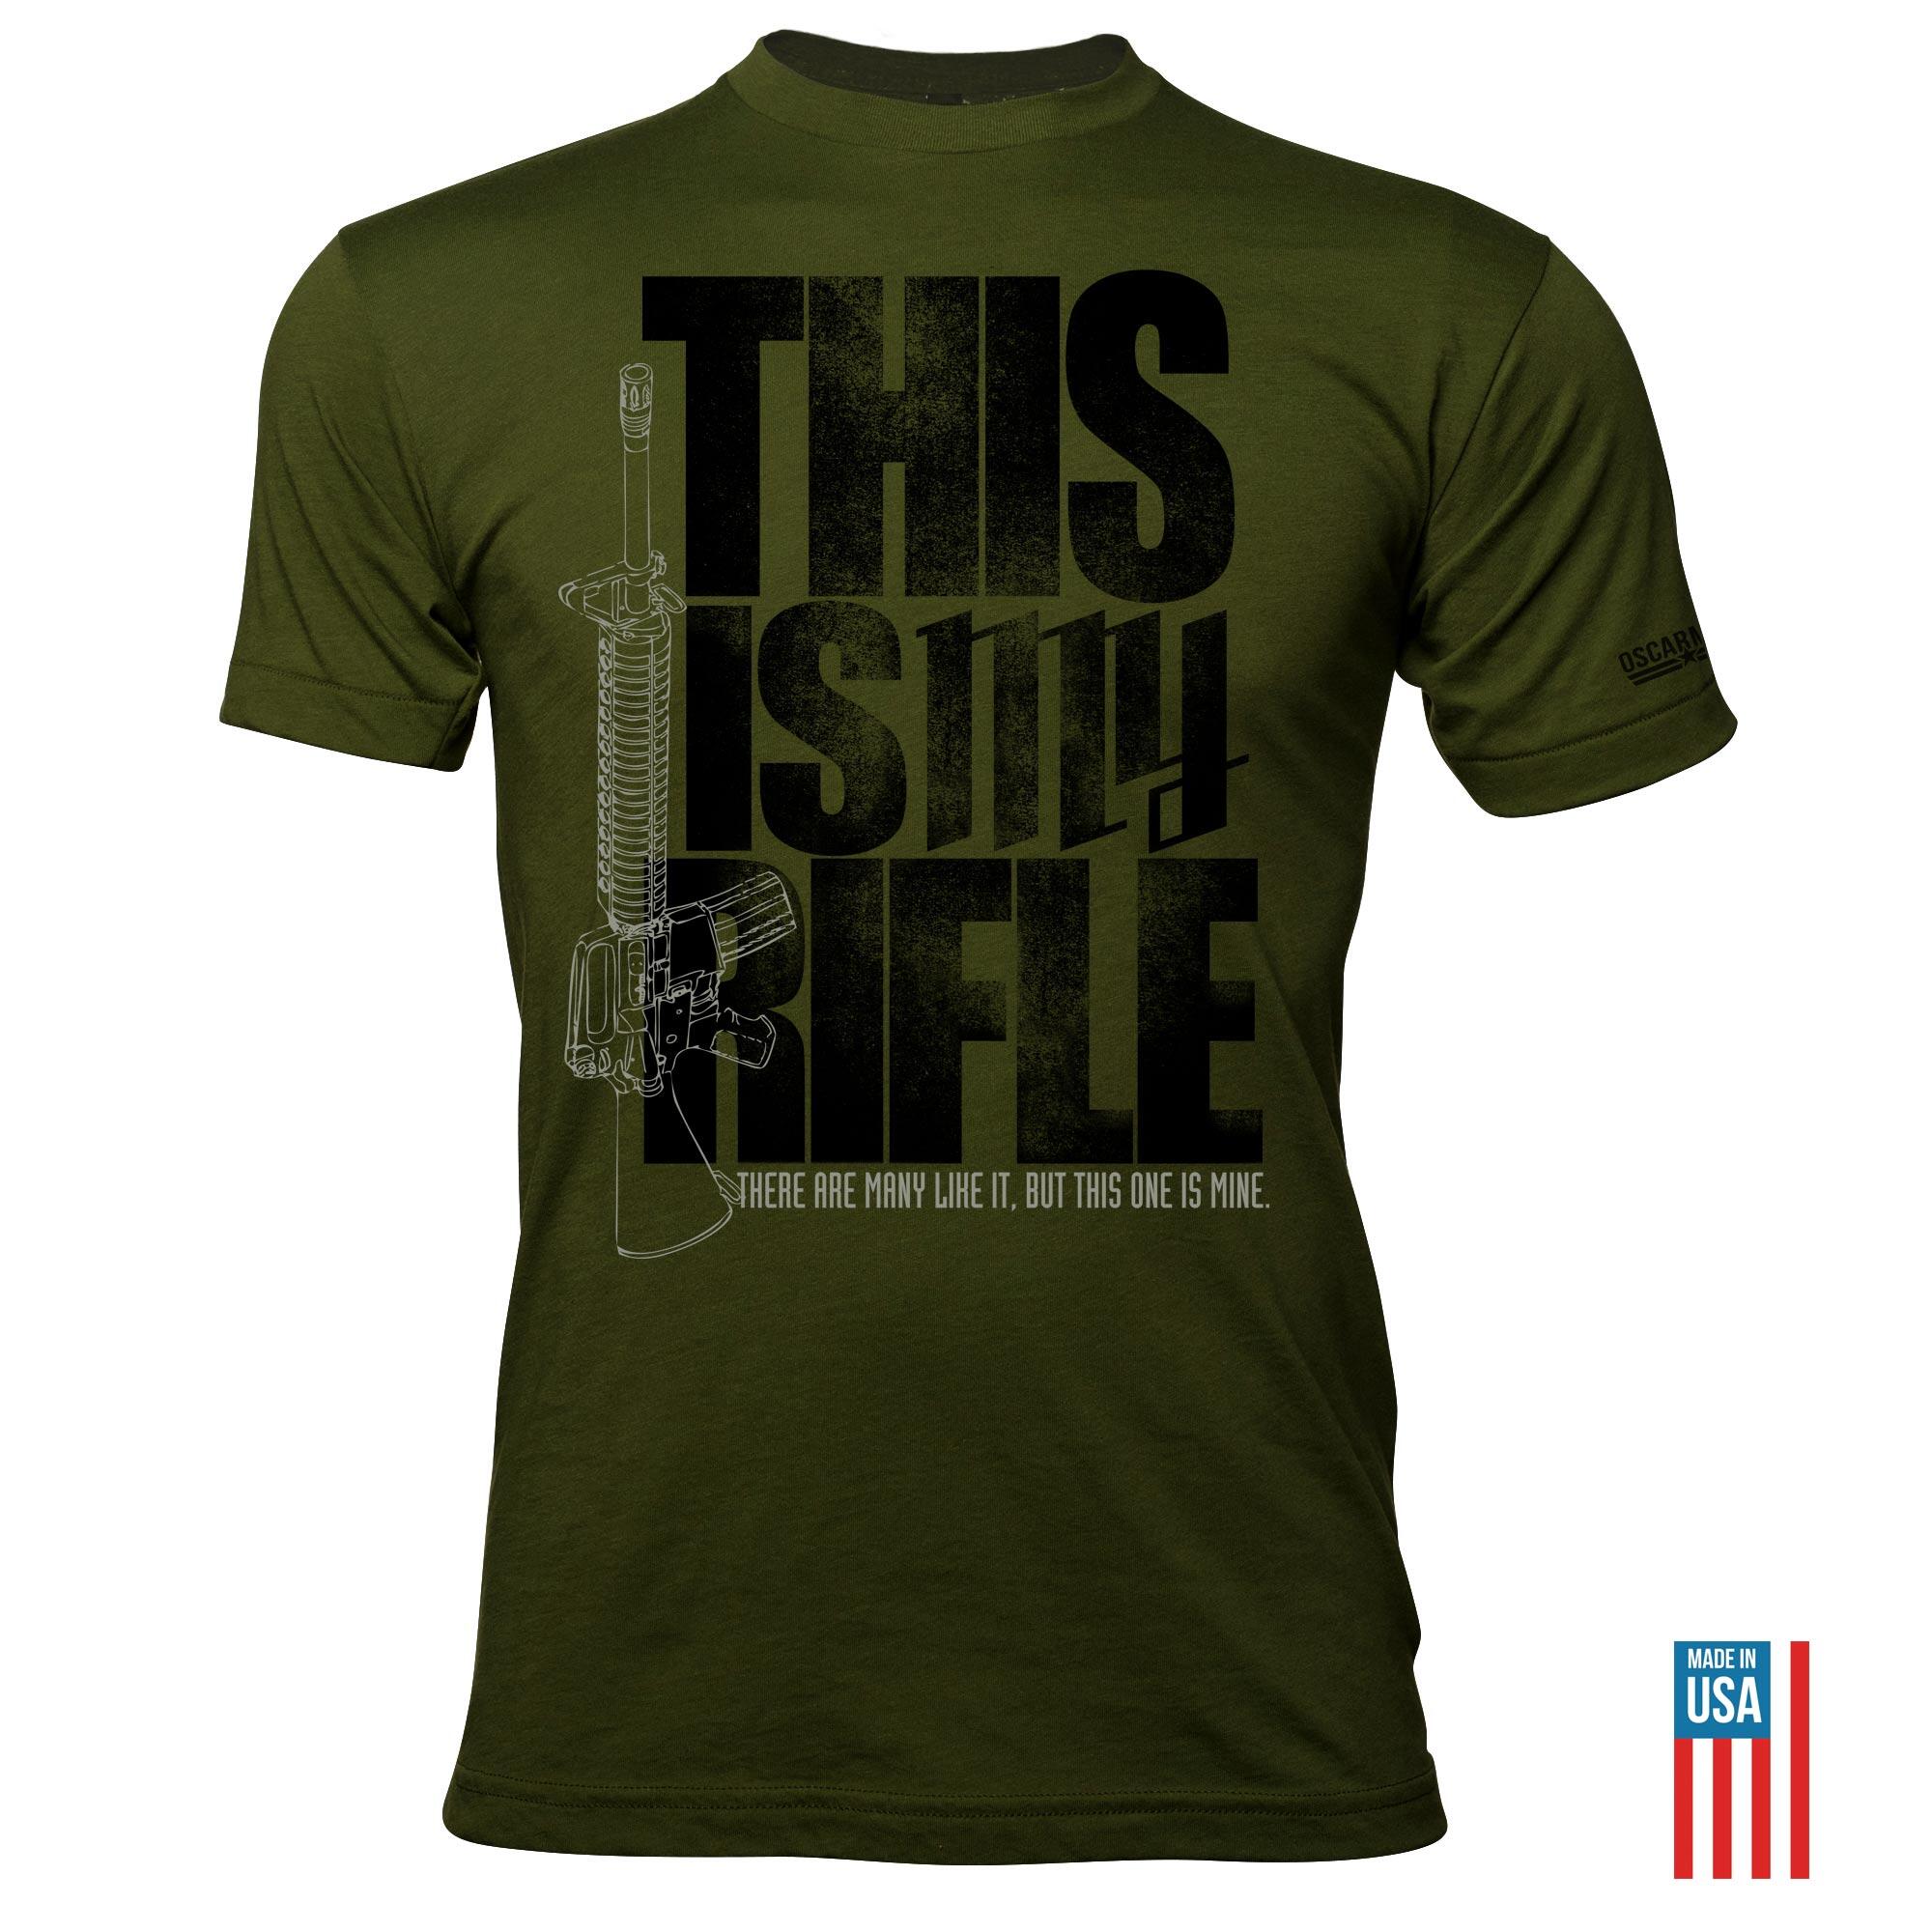 marine Riflemans Creed tee shirt